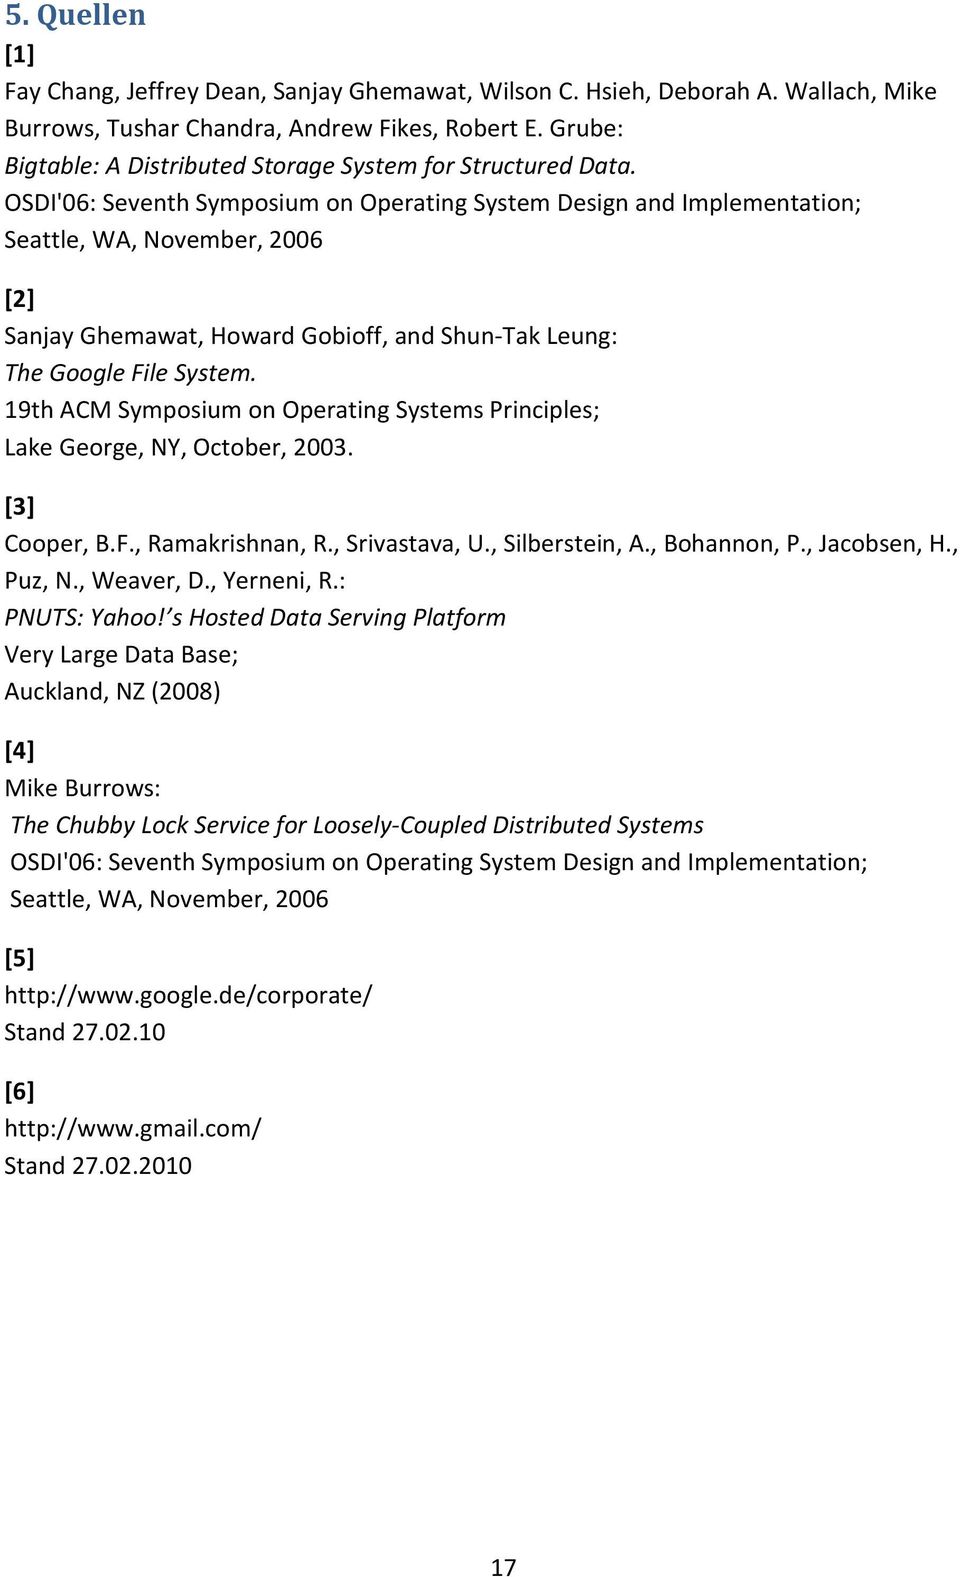 OSDI'06: Seventh Symposium on Operating System Design and Implementation; Seattle, WA, November, 2006 [2] Sanjay Ghemawat, Howard Gobioff, and Shun-Tak Leung: The Google File System.